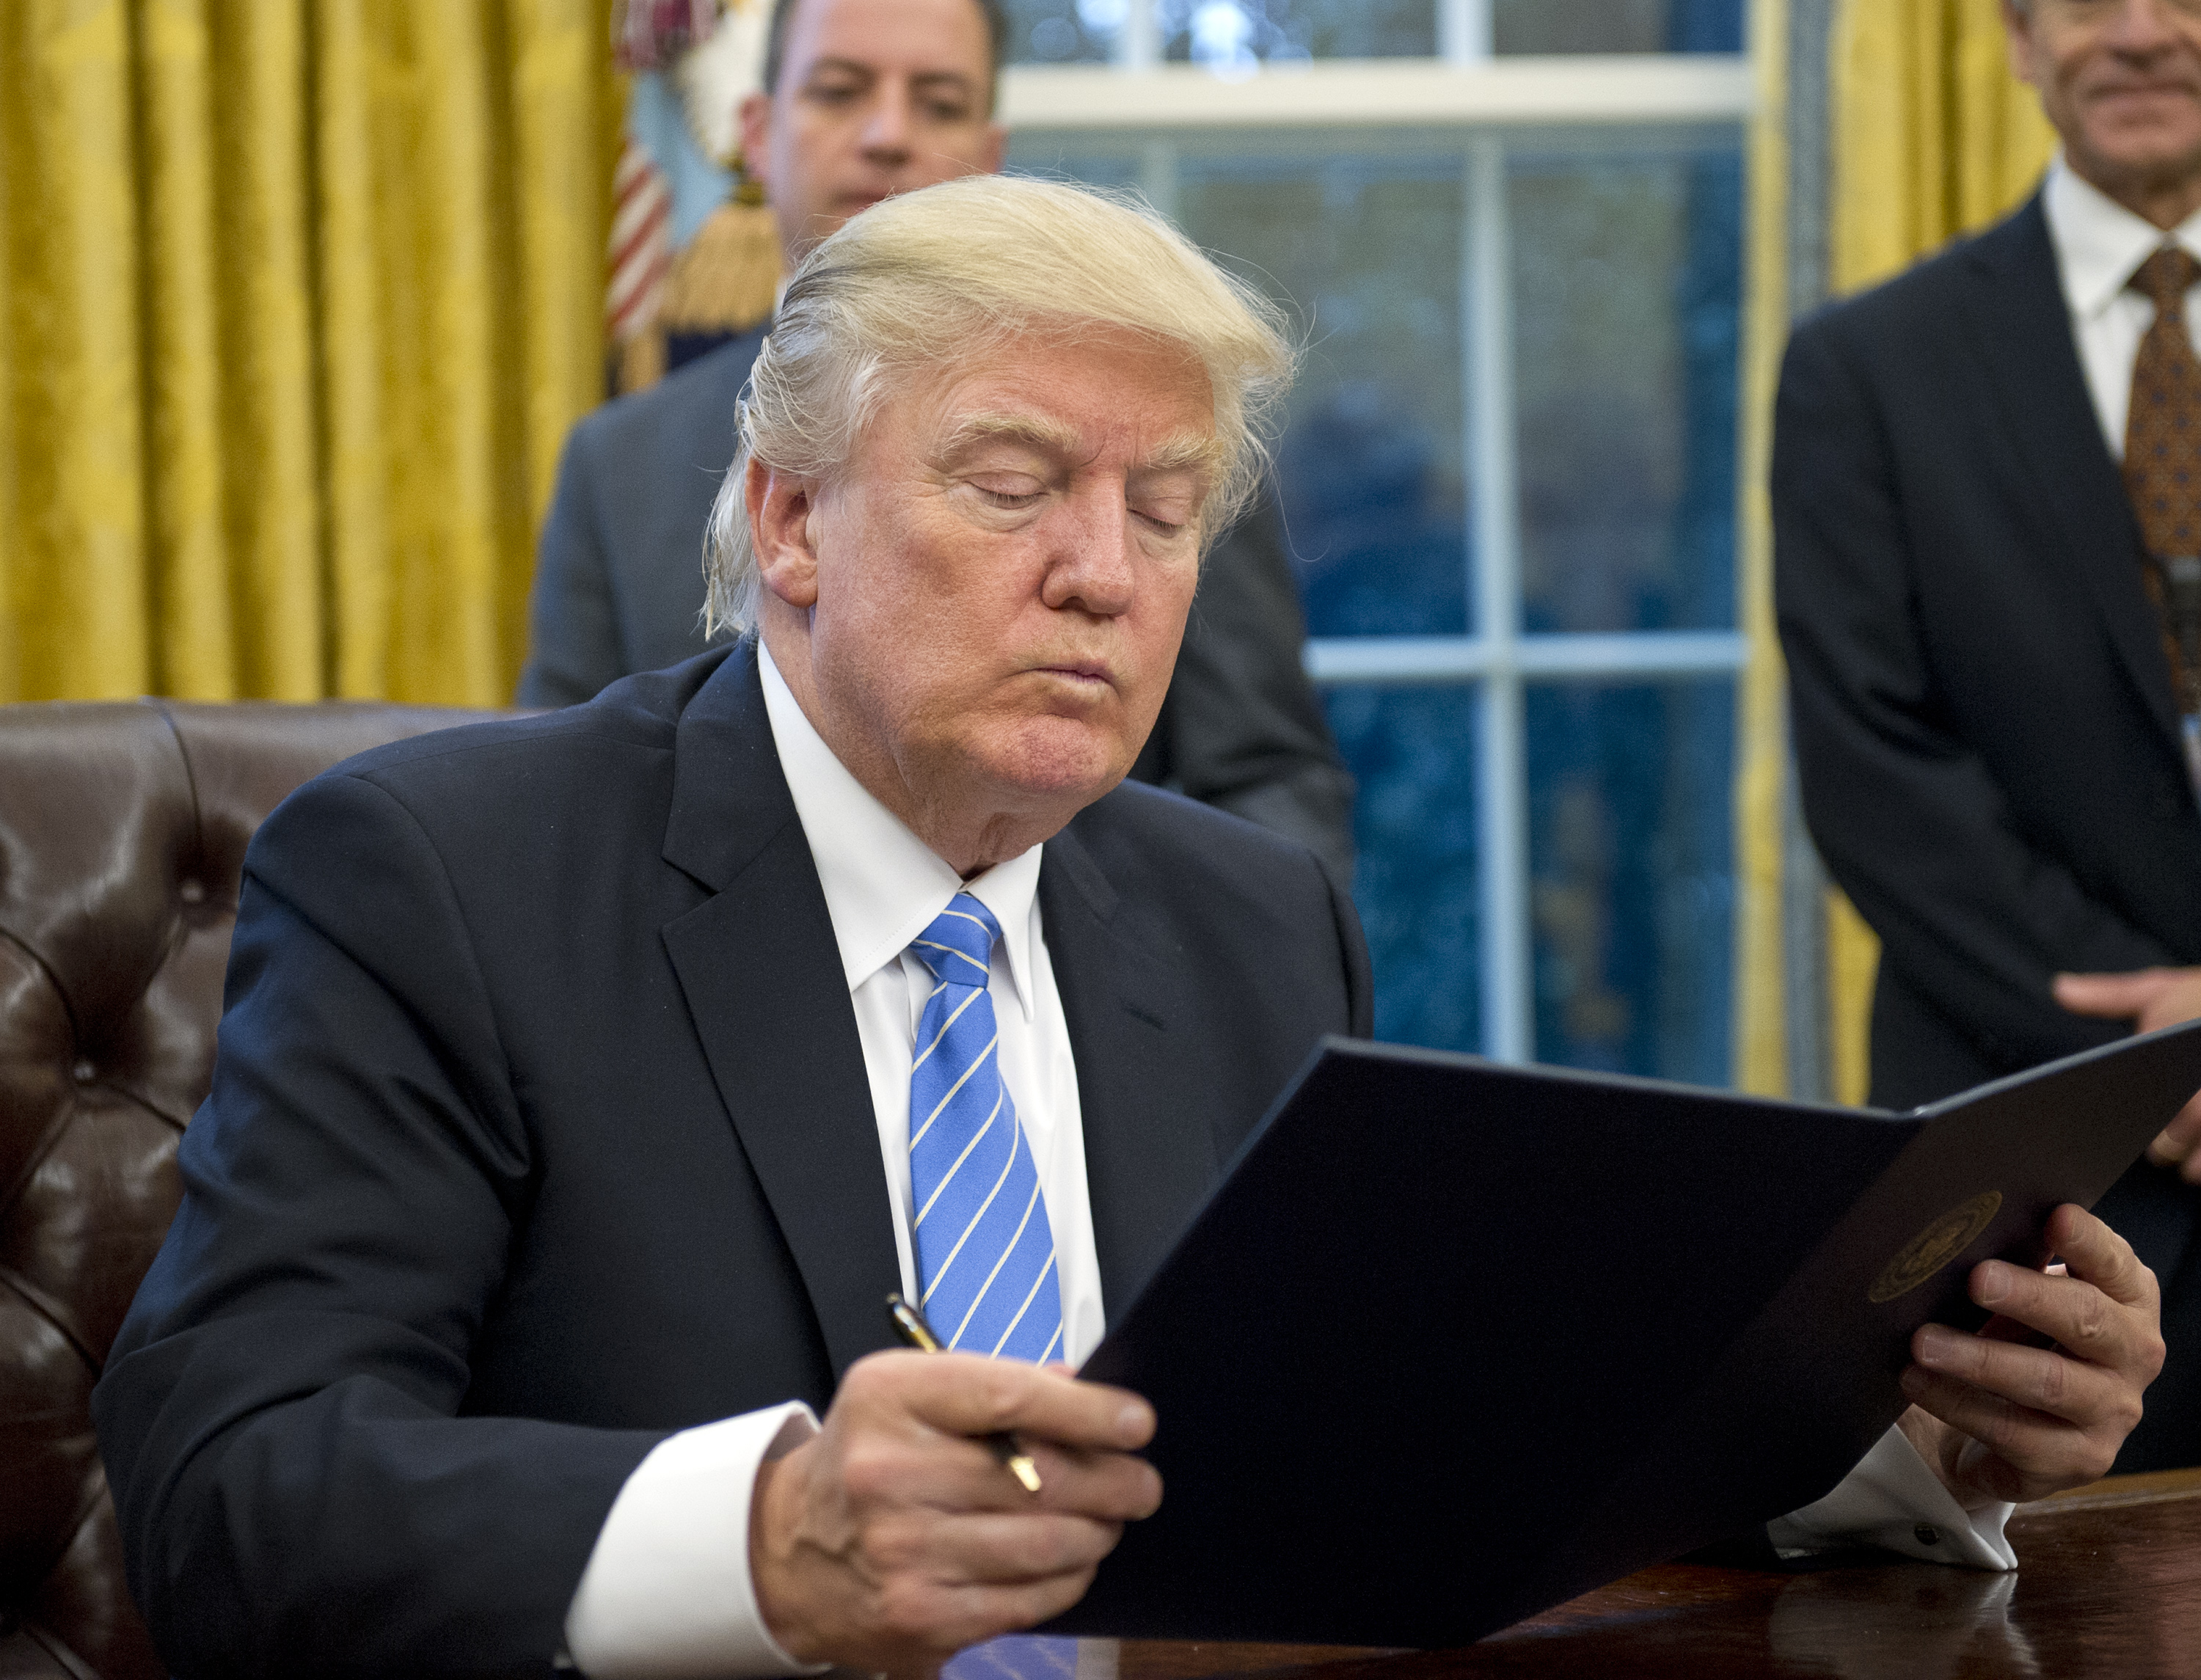 President Trump signs an executive order